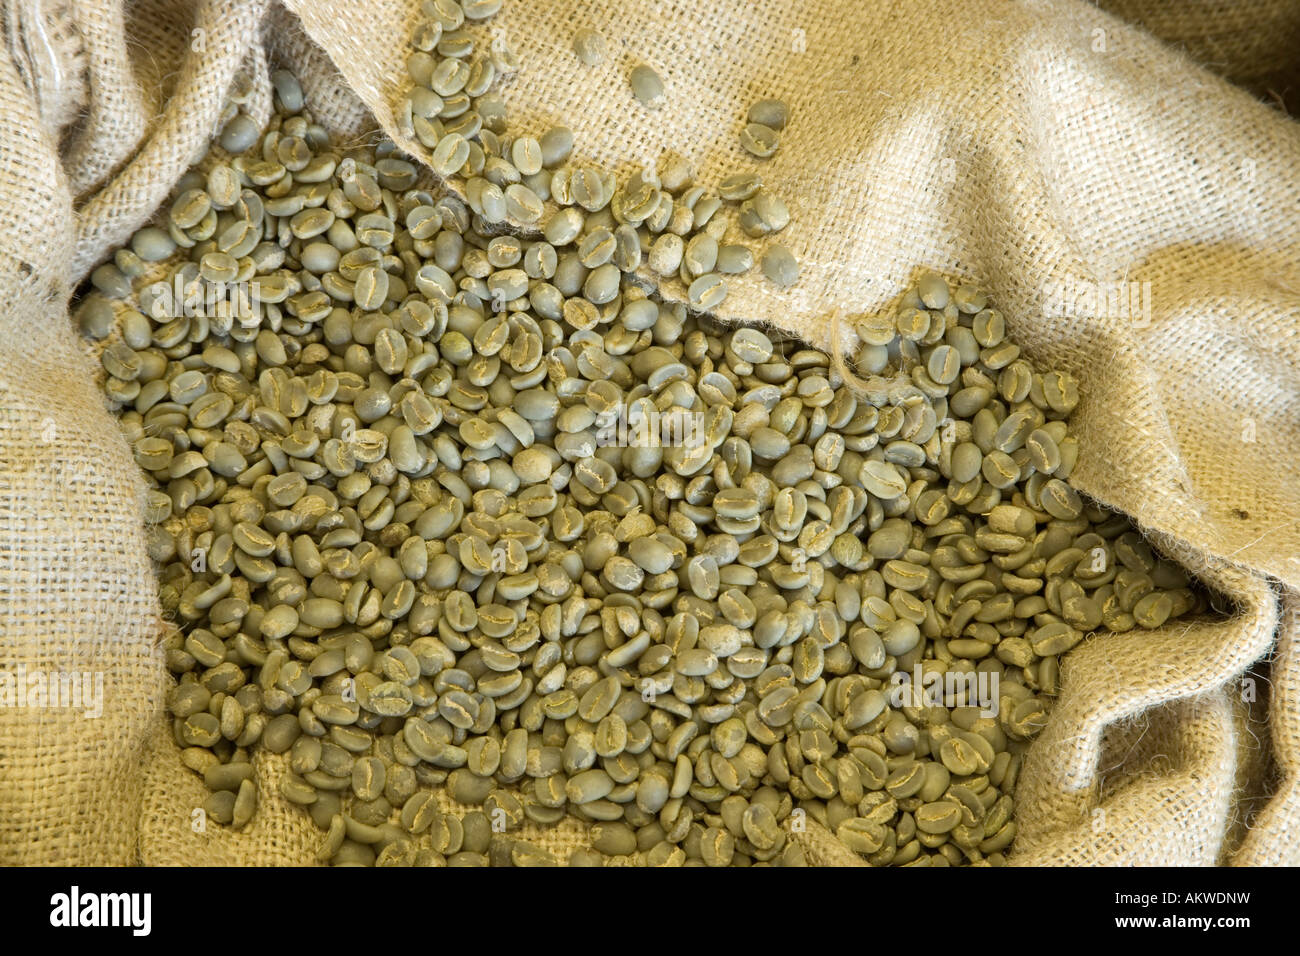 Dried Kona coffee beans in hemp sack. Stock Photo